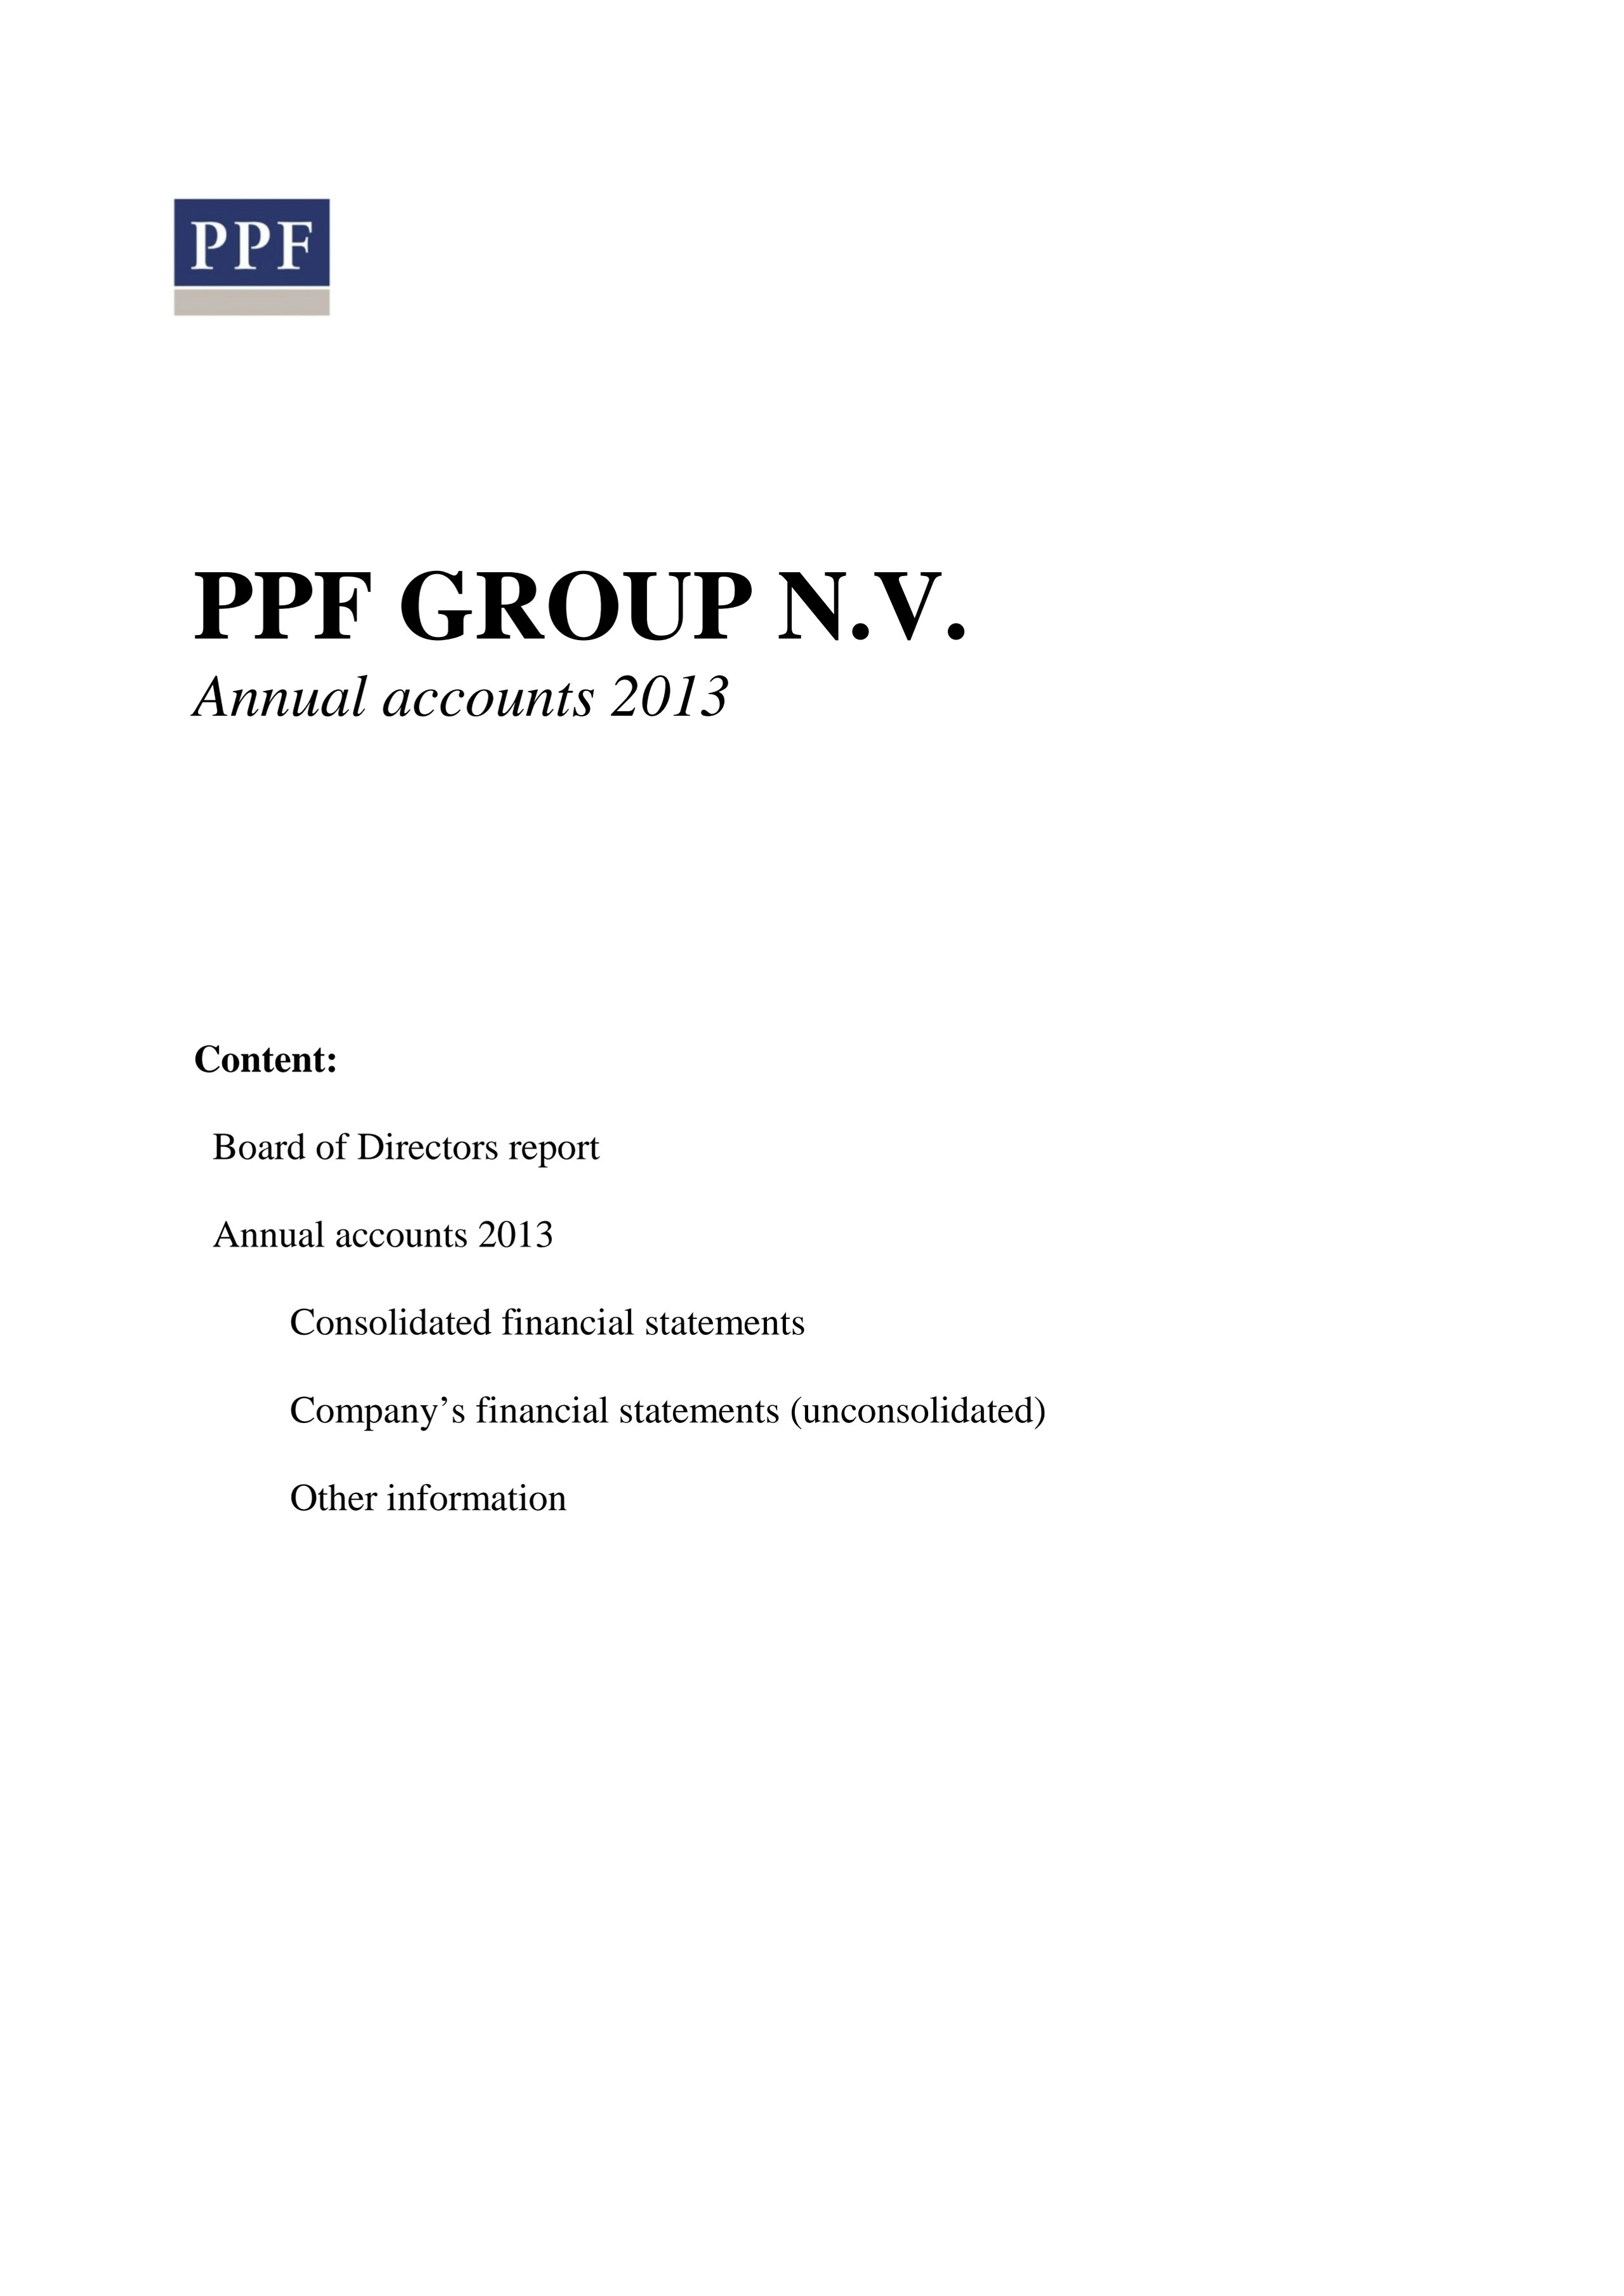 PPF GROUP N.V. Annual accounts 2013 (29/5/2013)